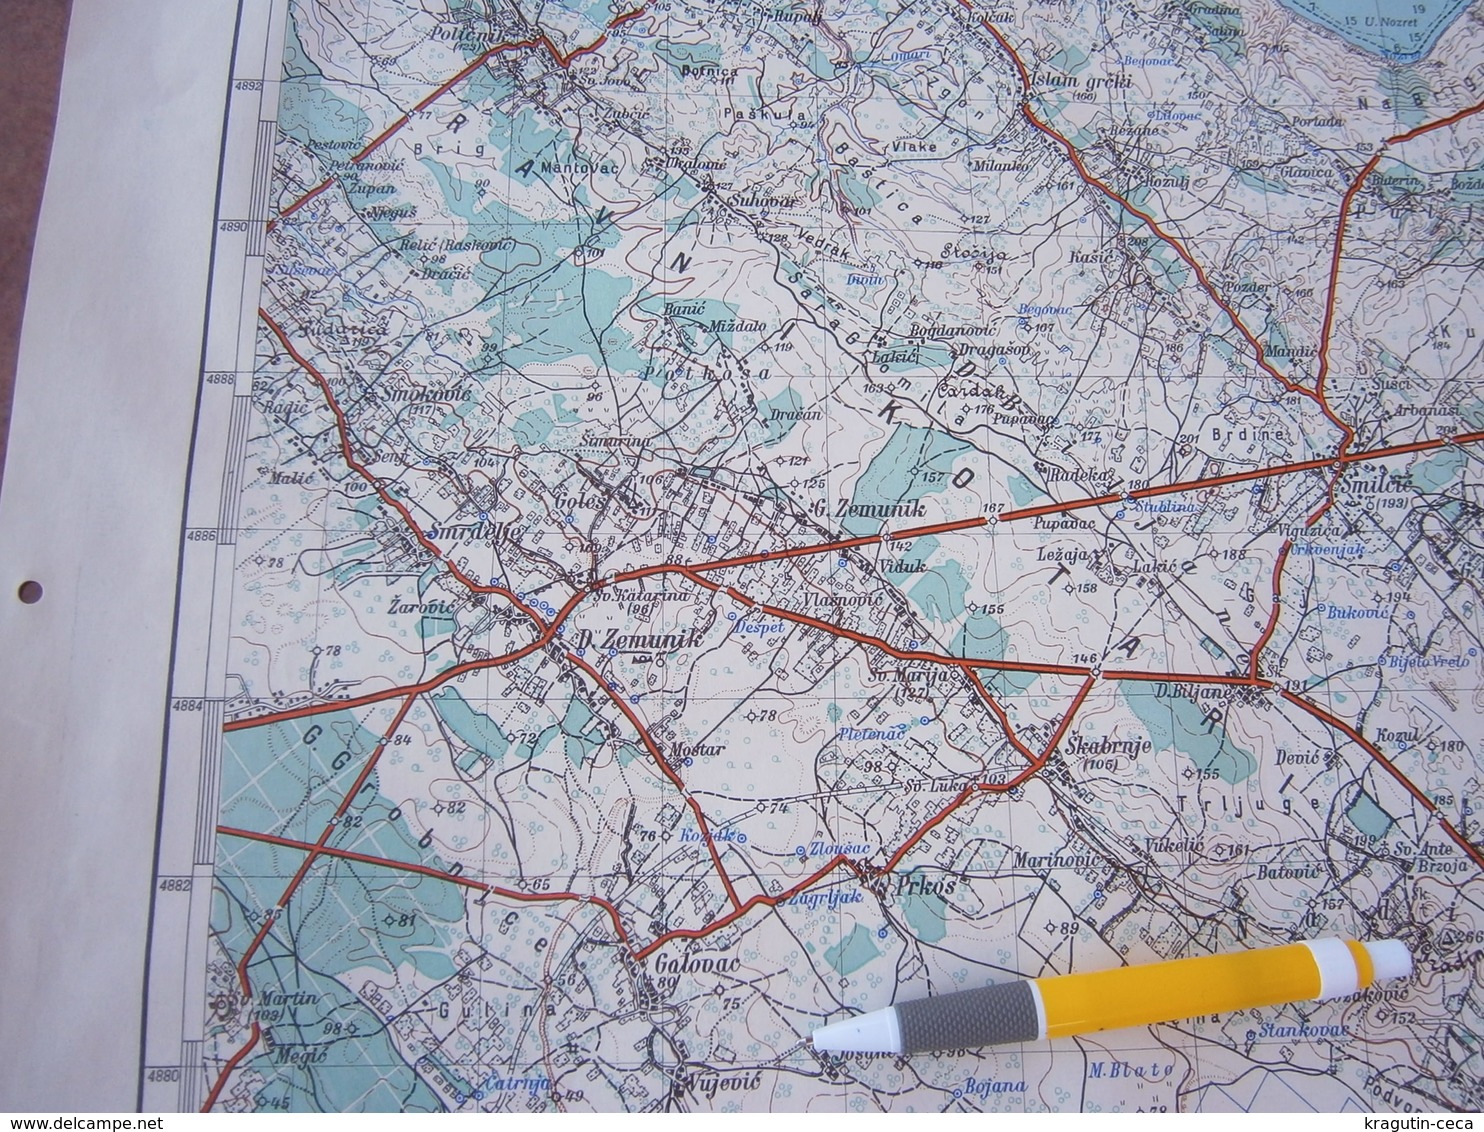 1959 NOVI GRAD CROATIA JNA YUGOSLAVIA ARMY MAP MILITARY CHART PLAN ZEMUNIK SKABRNJE PRKOS GOLOVAC DEBELJAK DUBRAVA LIŠAN - Mapas Topográficas